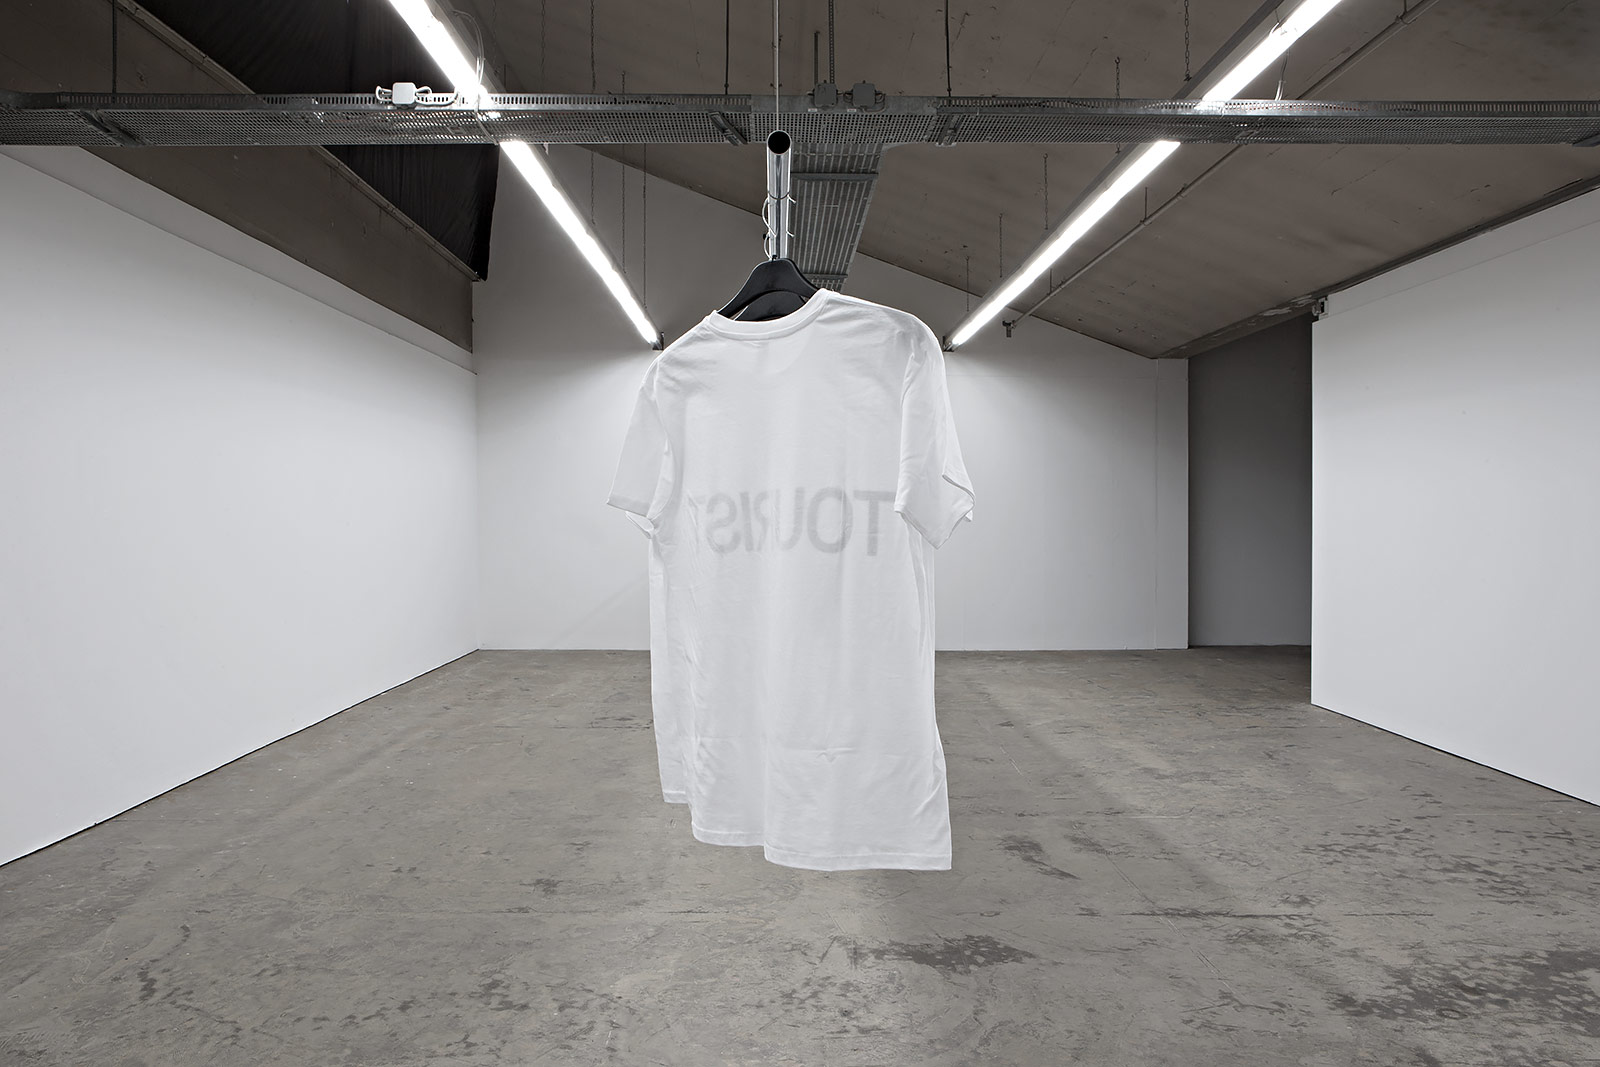 Esther Hunziker – Tourists, Installation / T-Shirt Edition, 2018